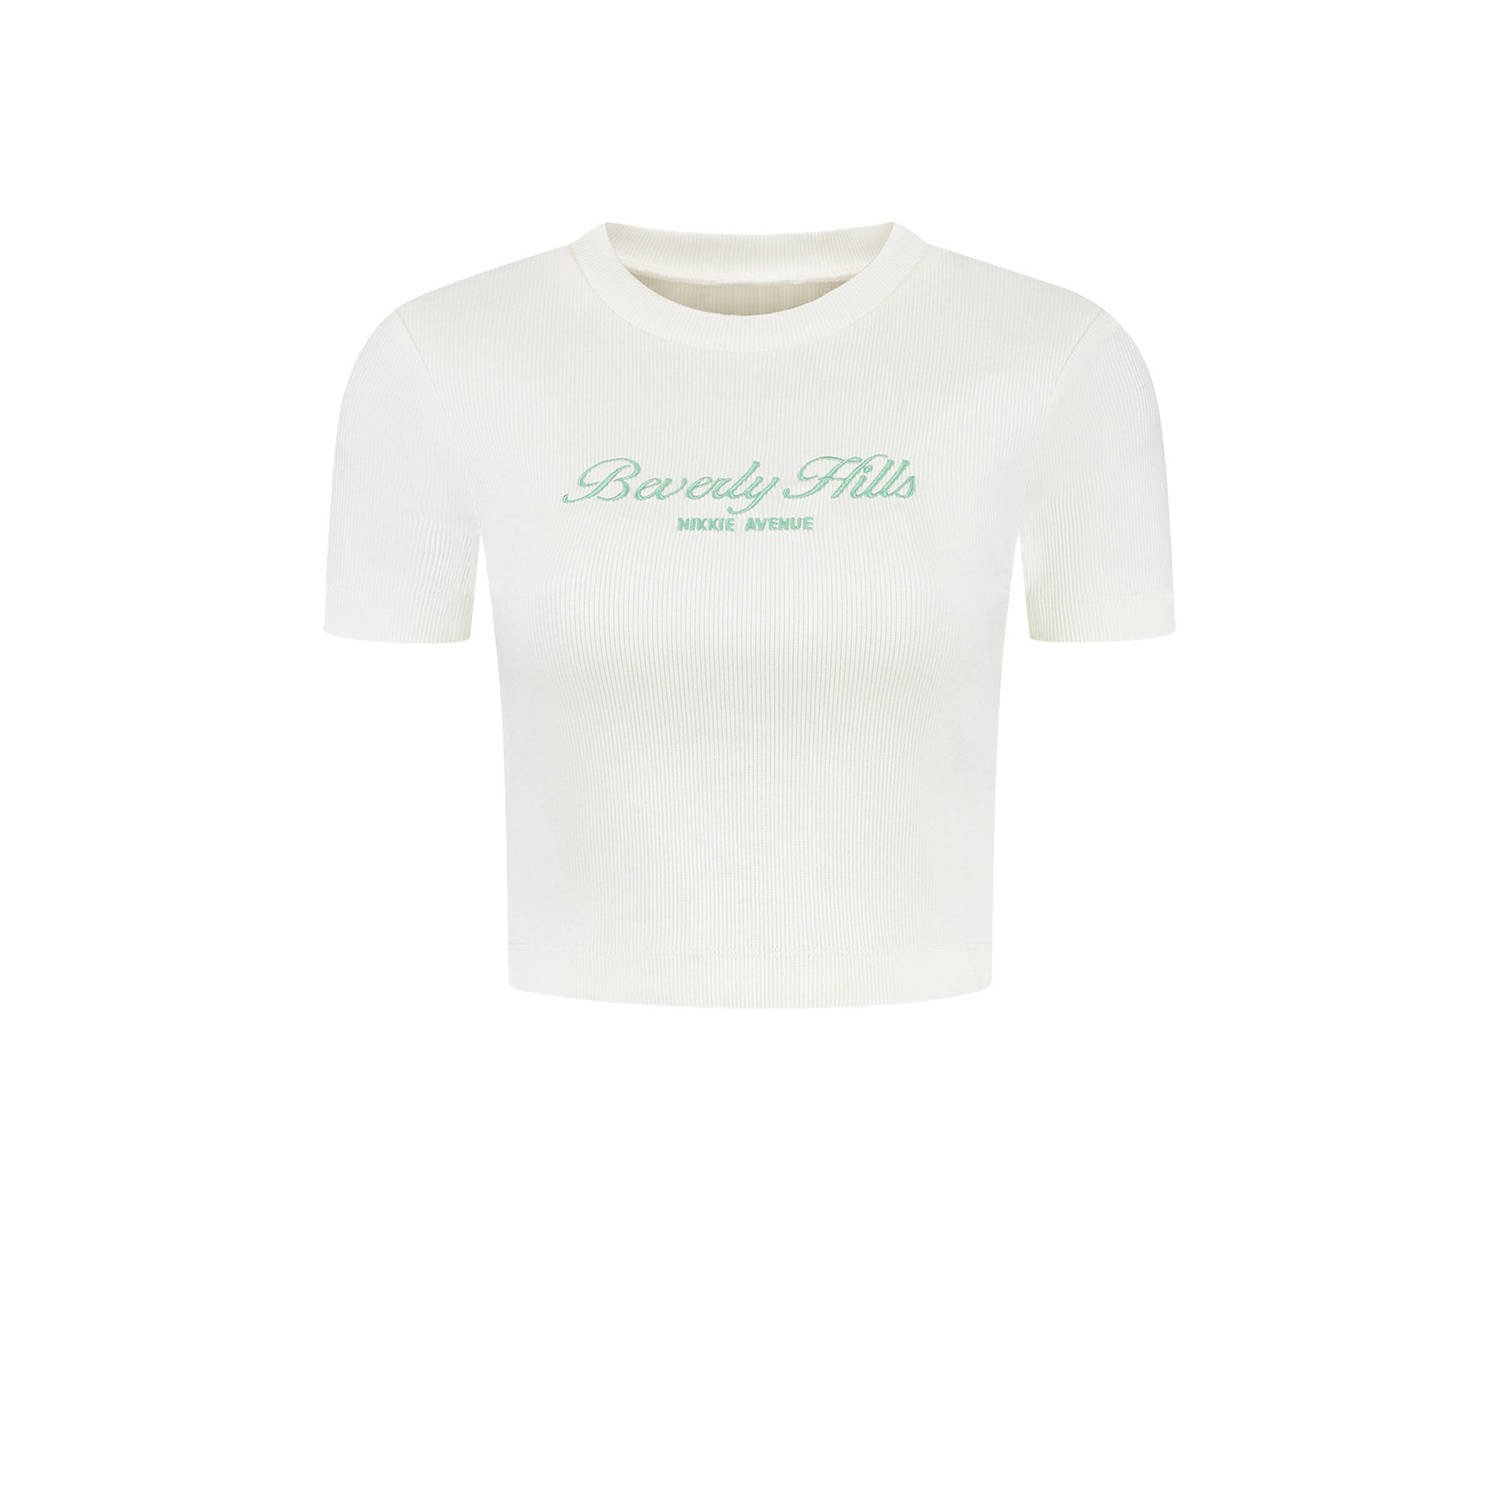 NIKKIE ribgebreid T-shirt Beverly Hills met tekst wit